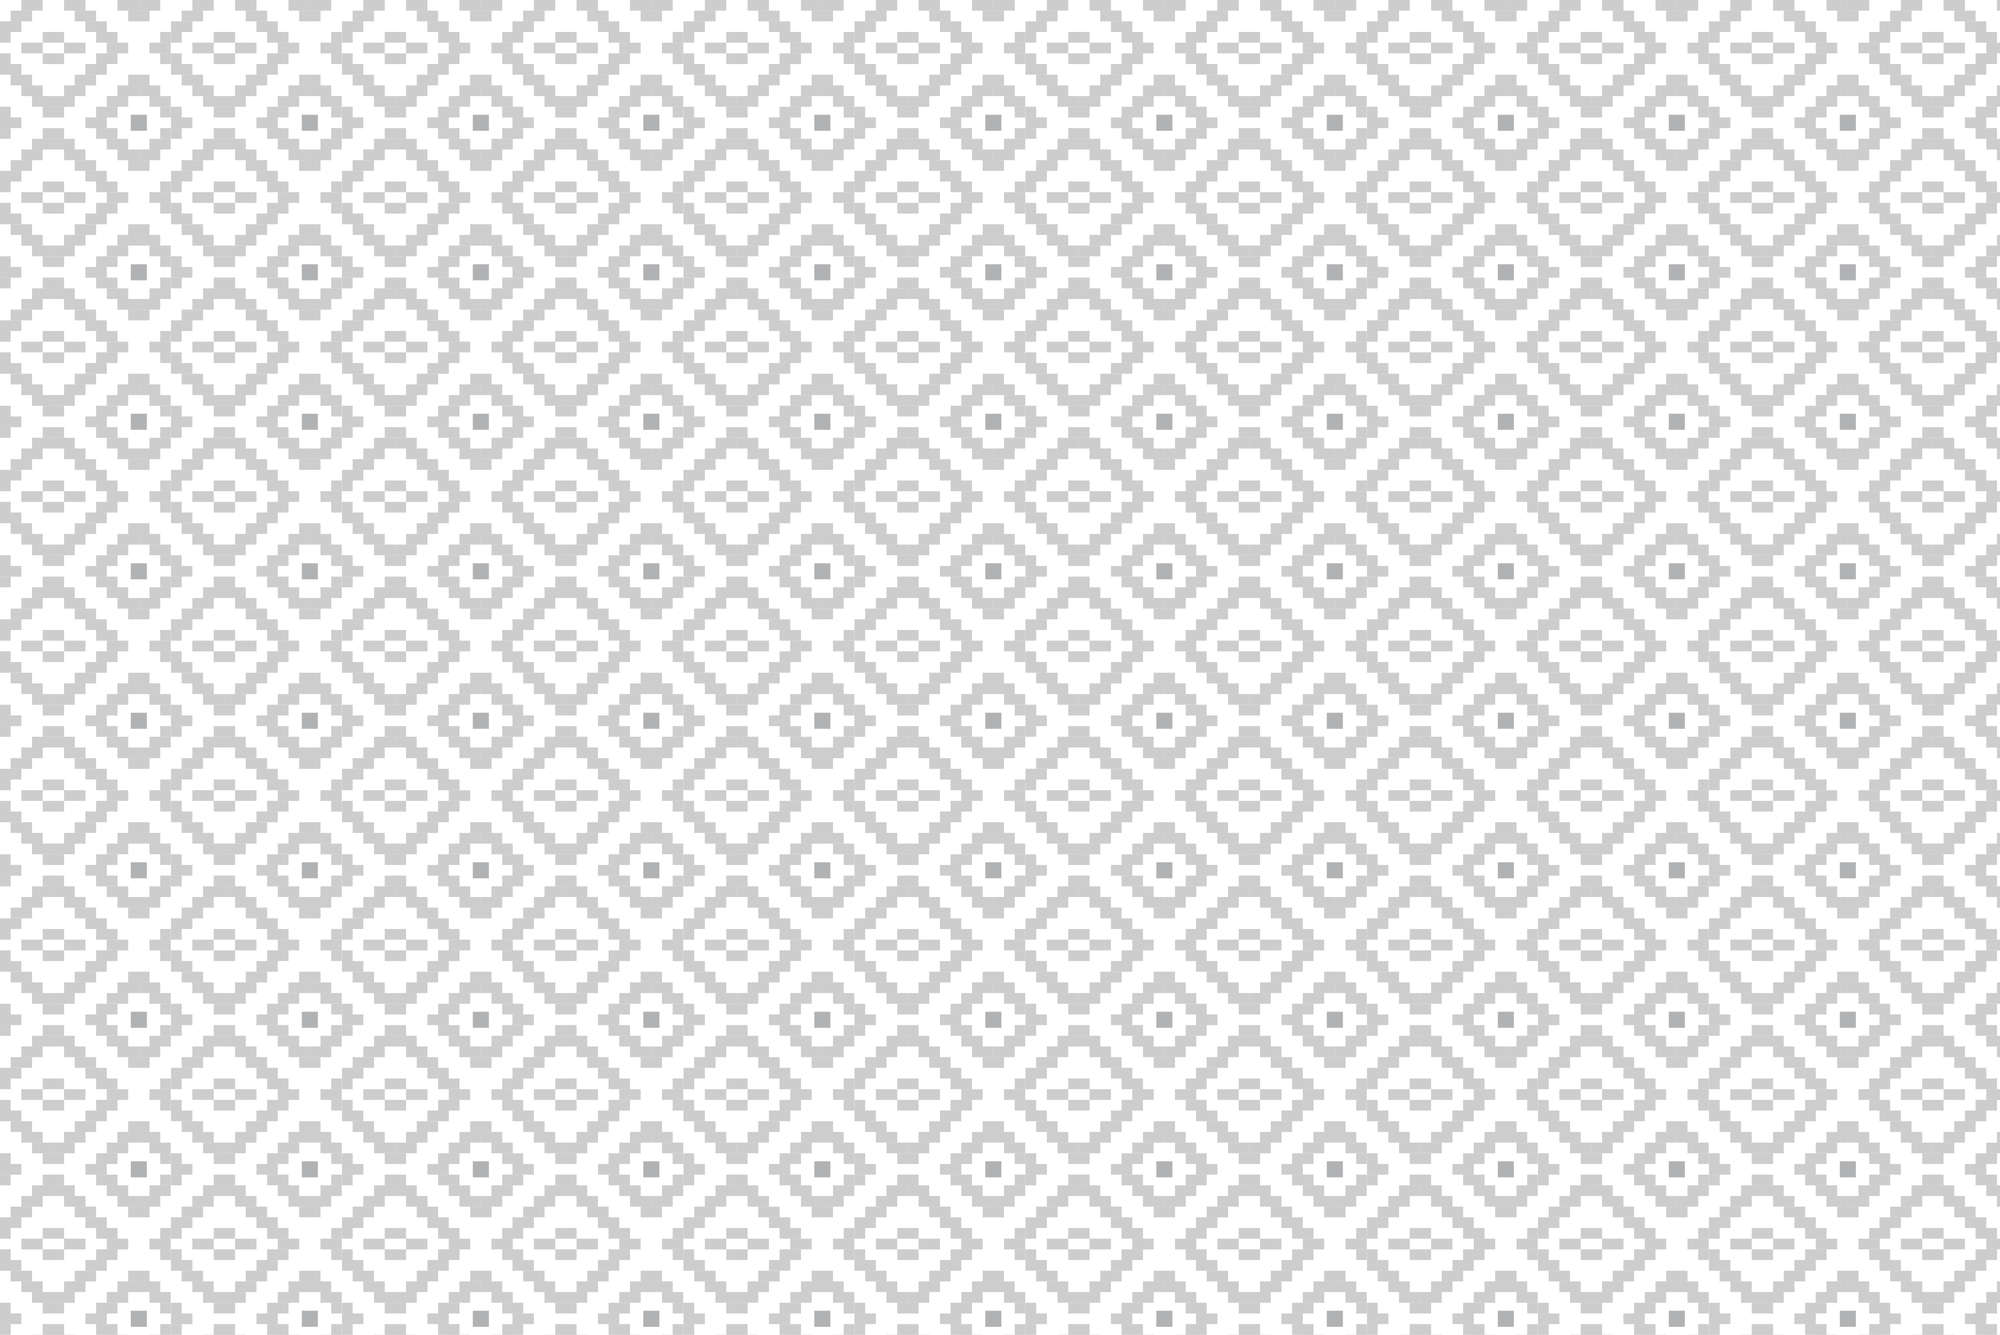             Design Fototapete kleine Quadrate mit Mustern grau auf Premium Glattvlies
        